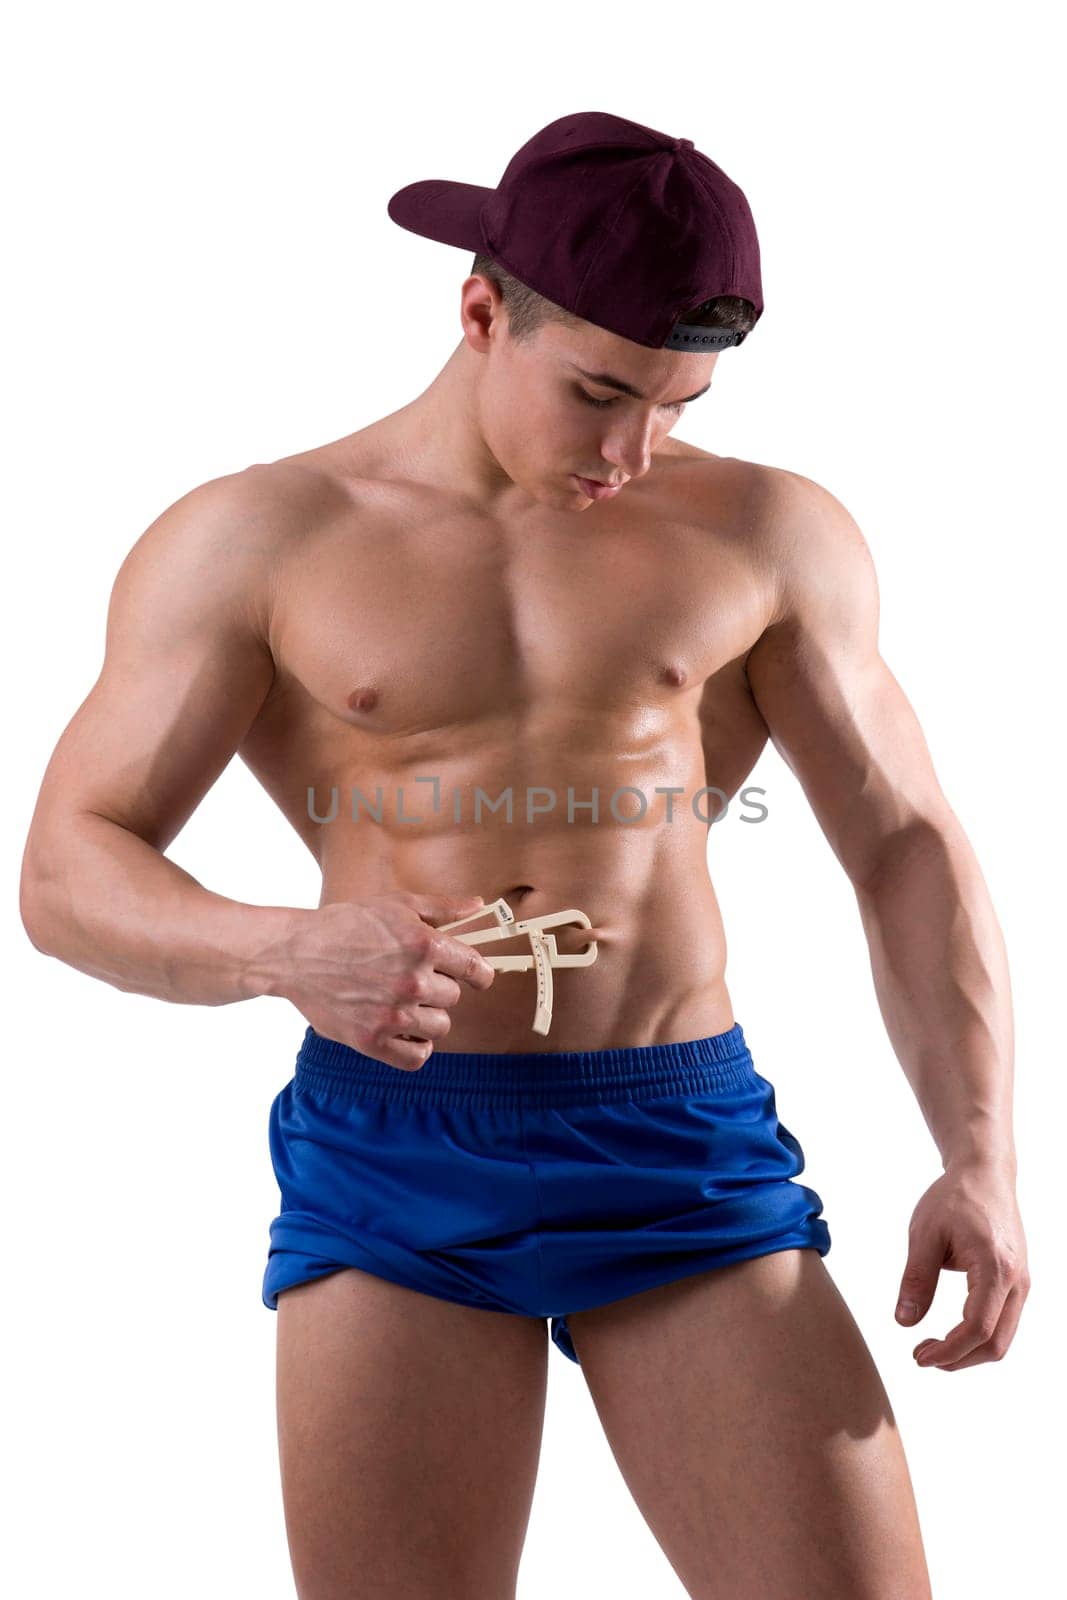 Photo of a shirtless man using a caliper by artofphoto